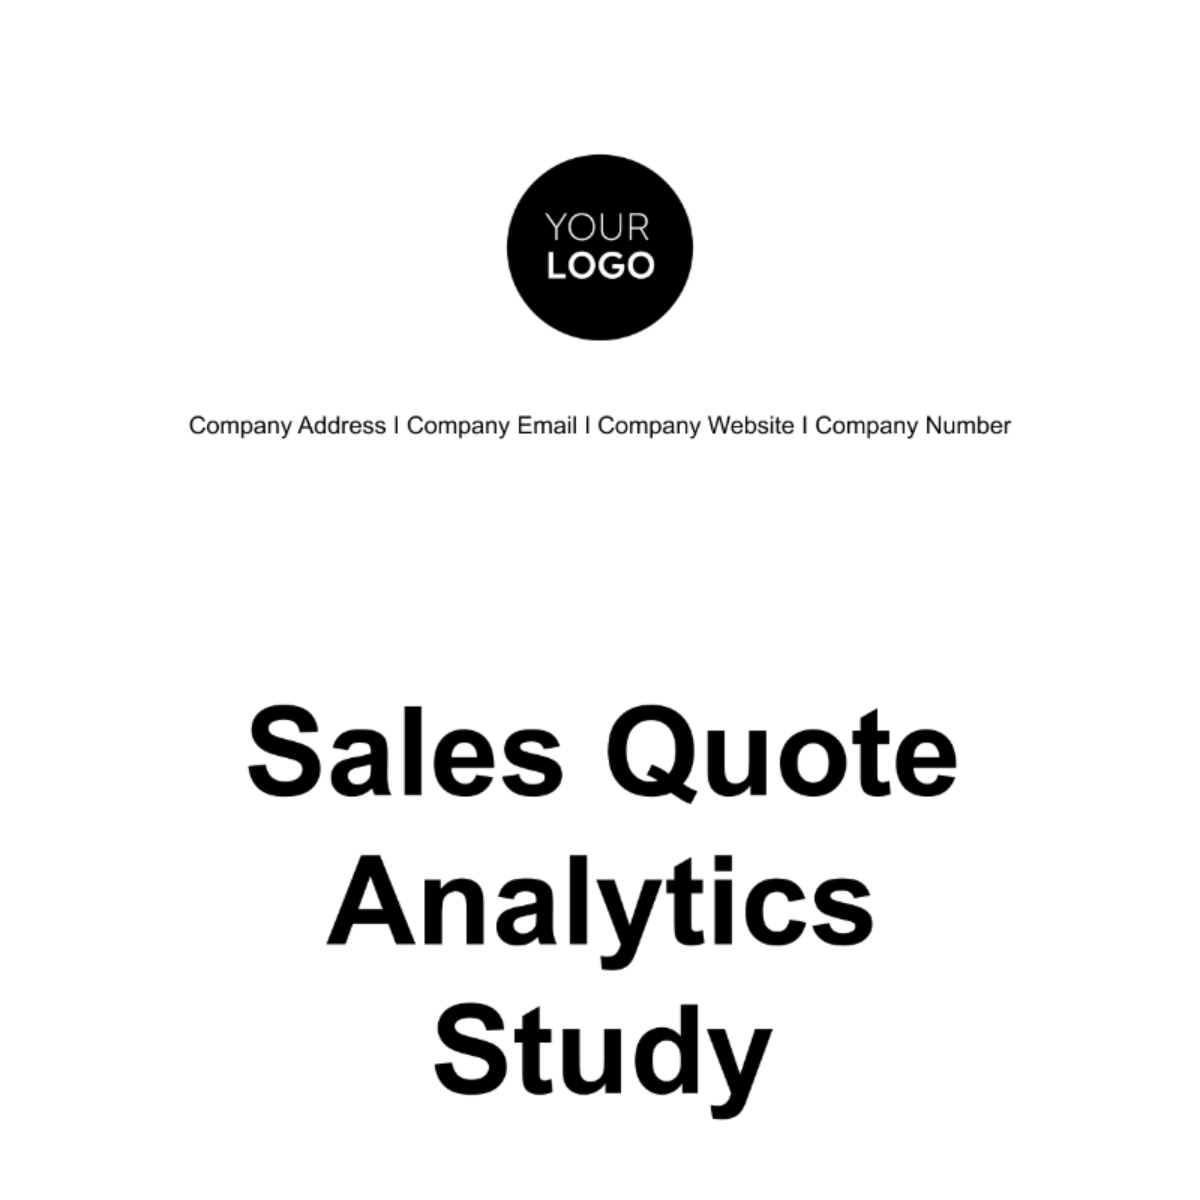 Sales Quote Analytics Study Template